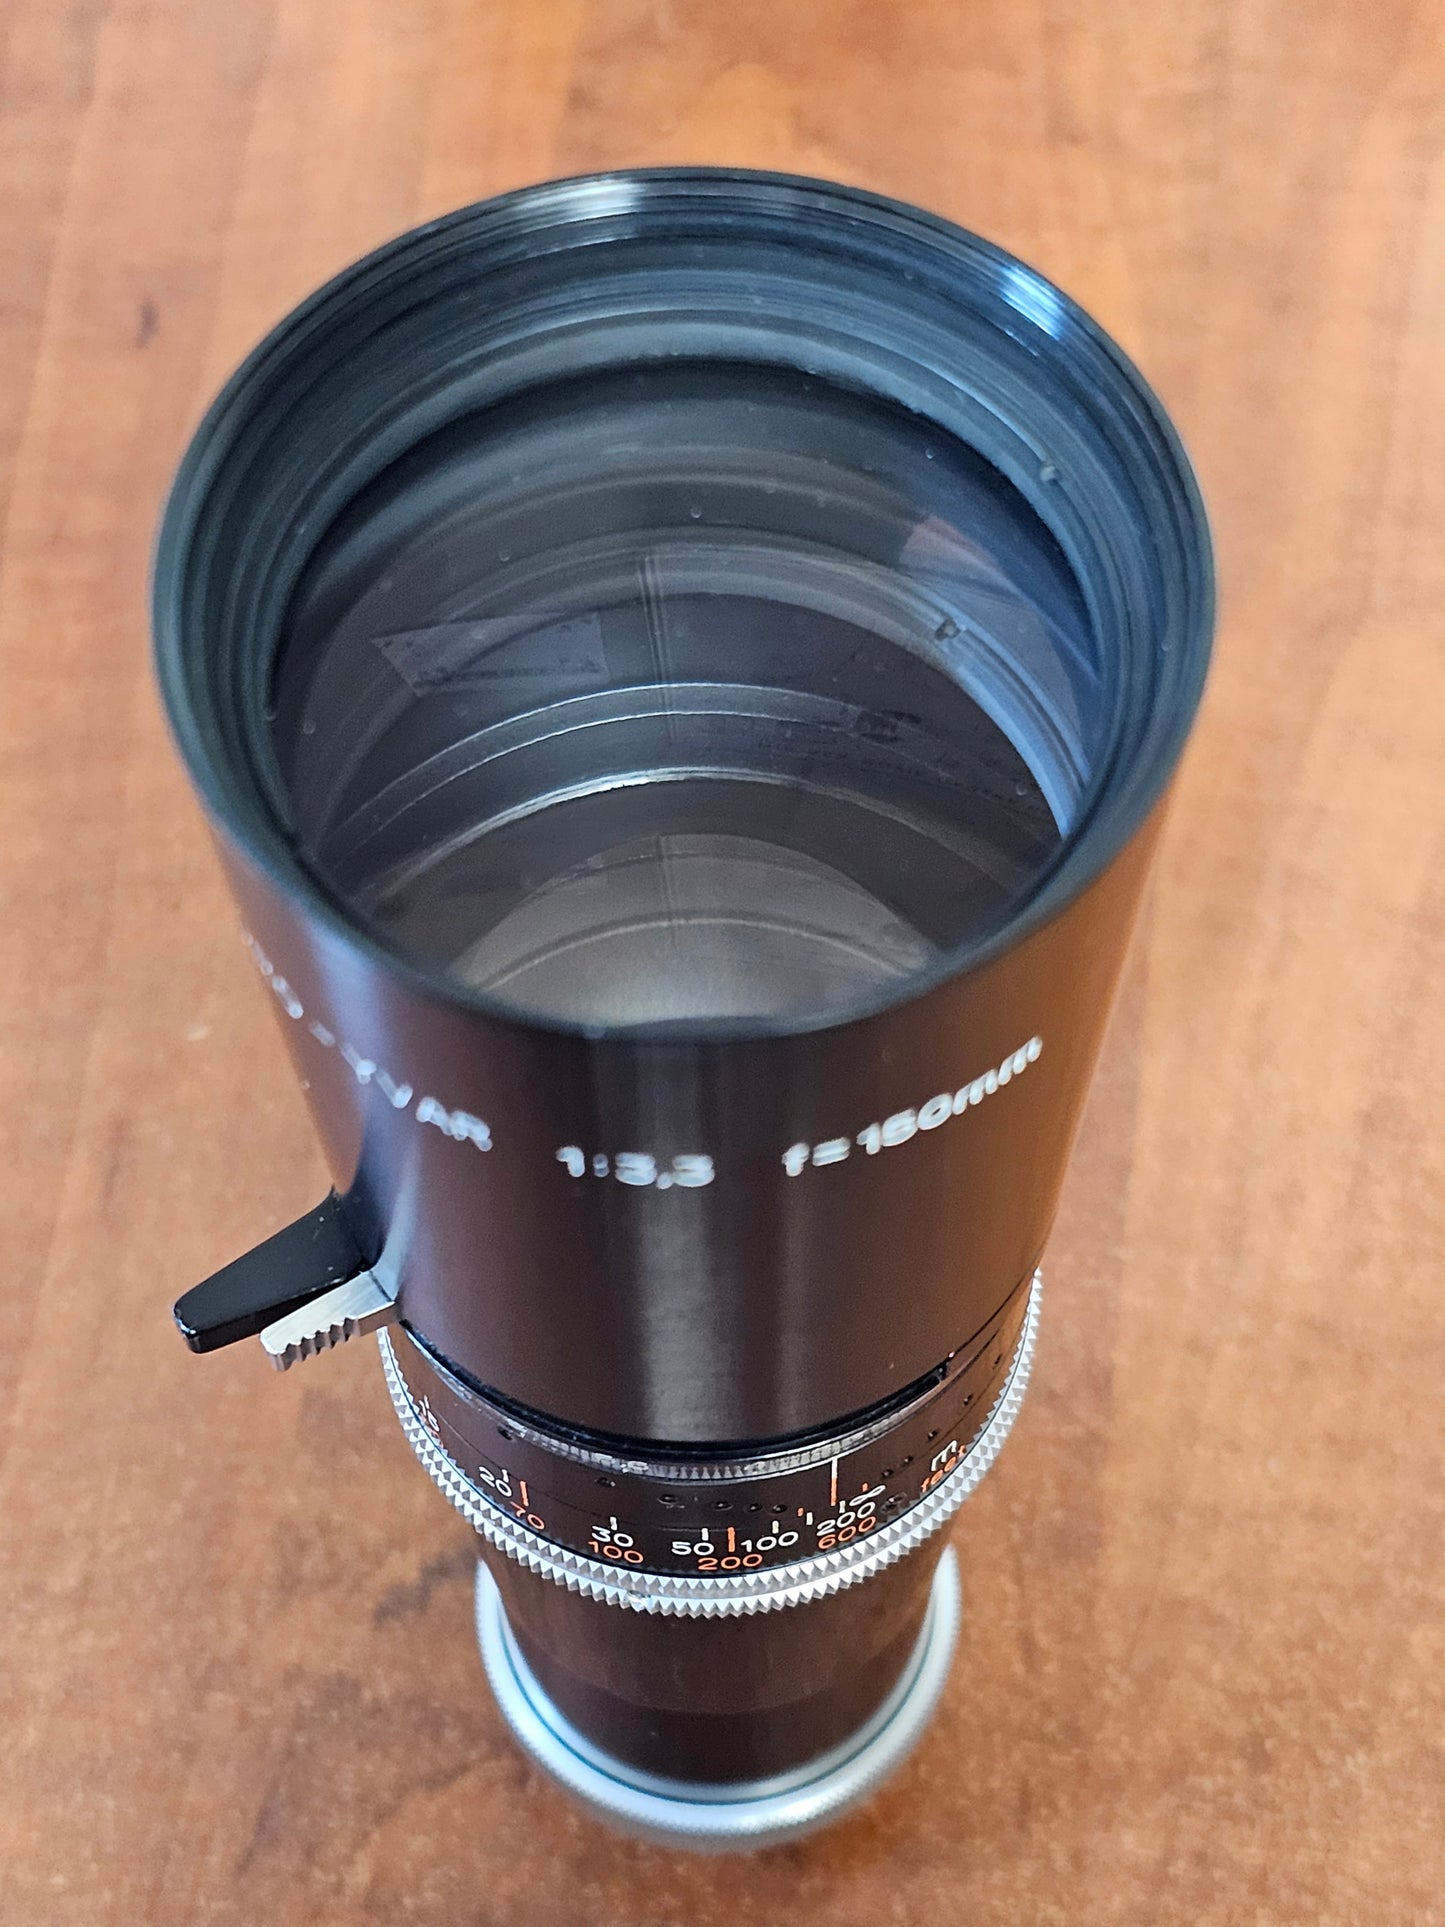 Yvar 150mm f3.3 Macro Preset C Mount lens S# 1127238